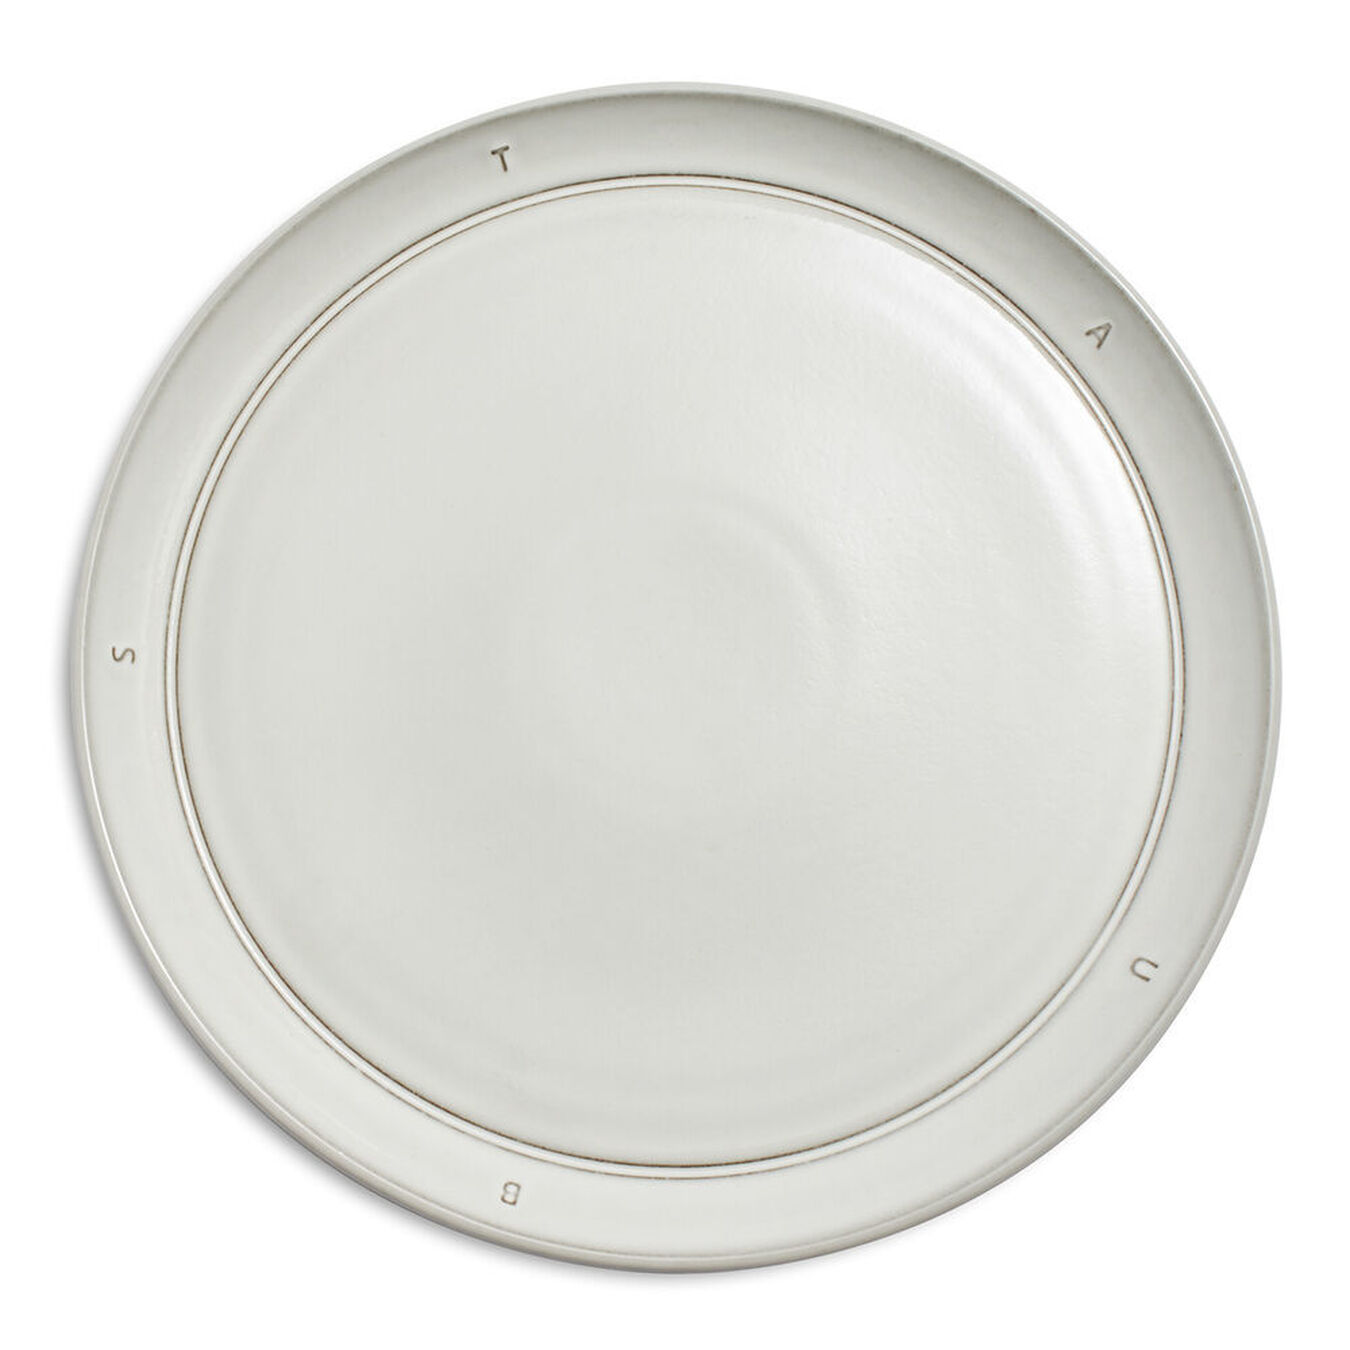 Serving set, 12 Piece | Off-White | ceramic,,large 4